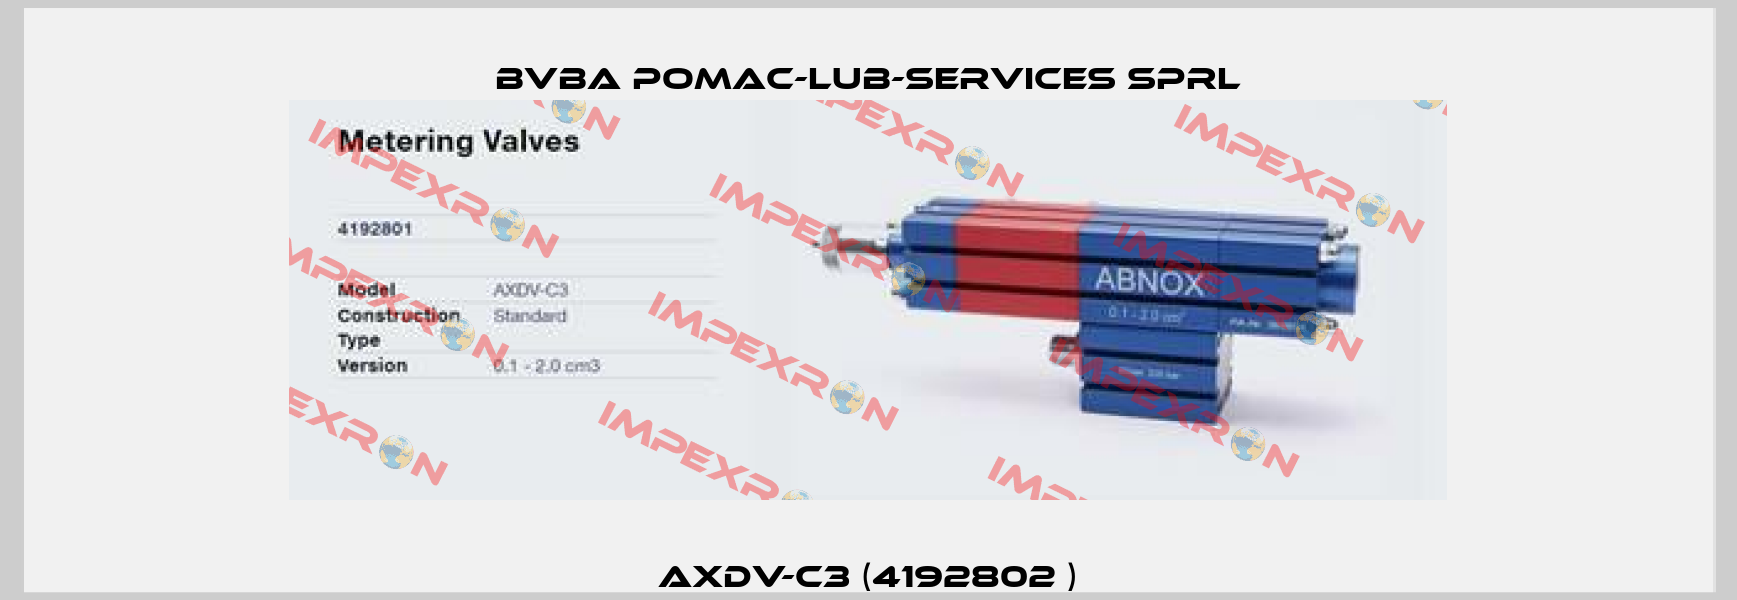 AXDV-C3 (4192802 ) bvba pomac-lub-services sprl